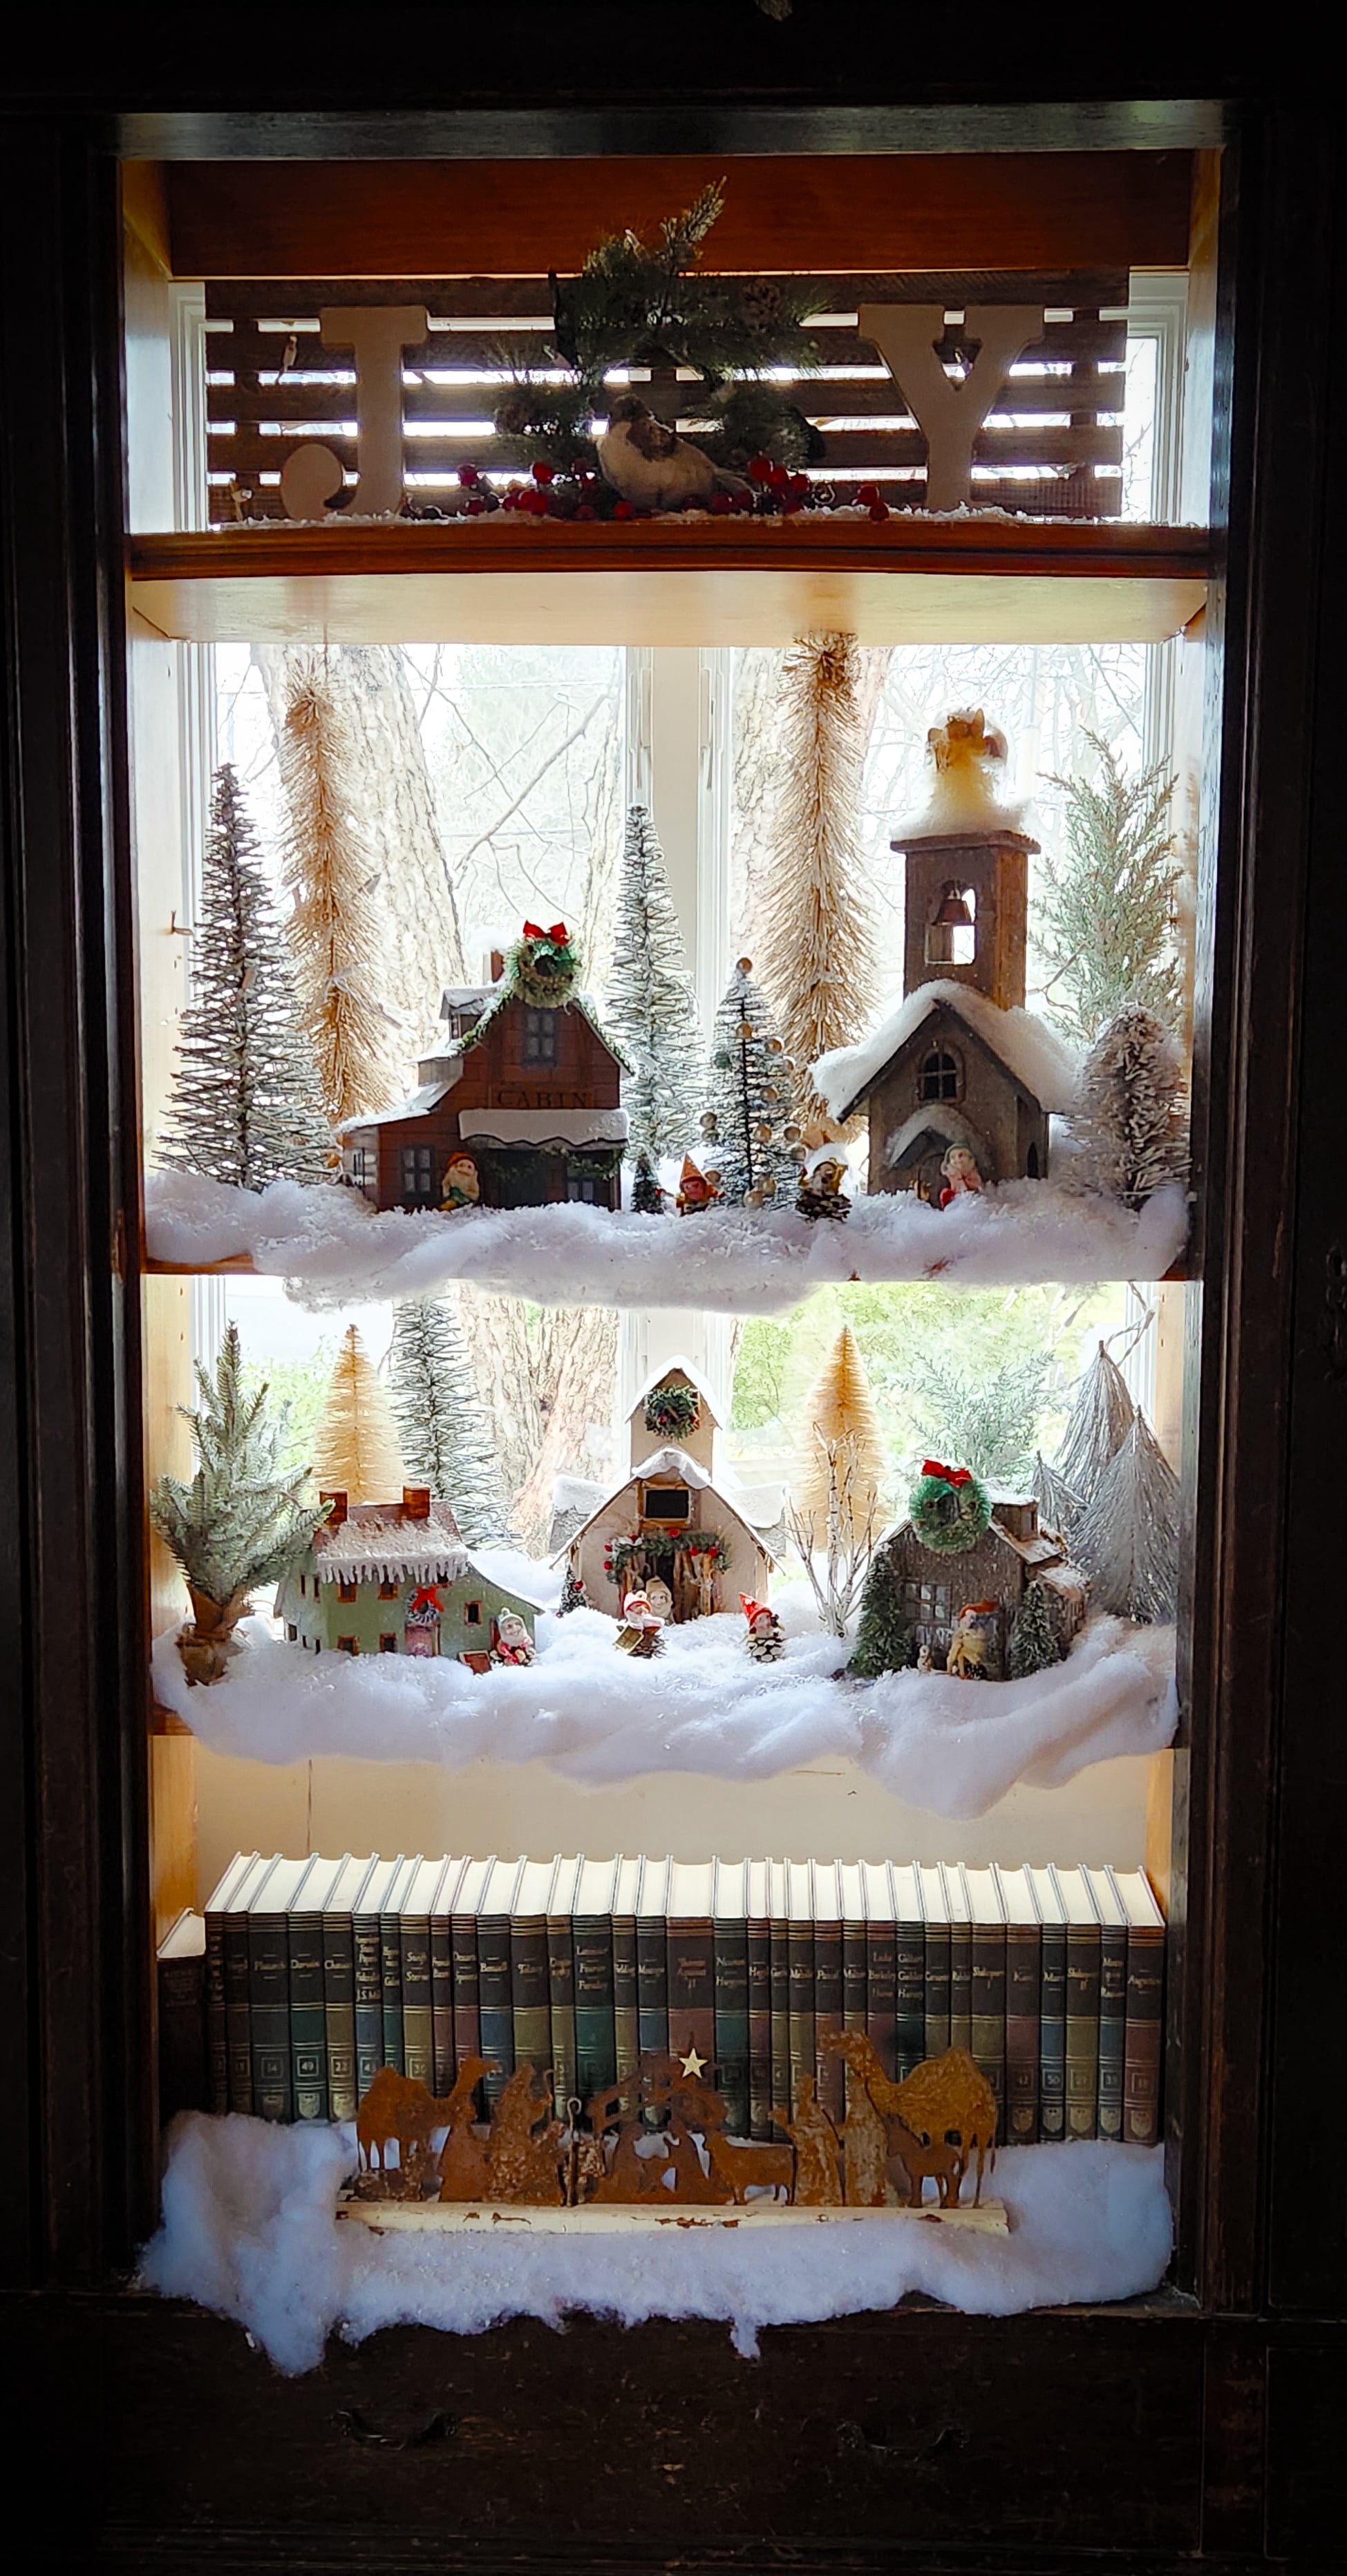 Missouri Christmas - miniature village in a bookcase